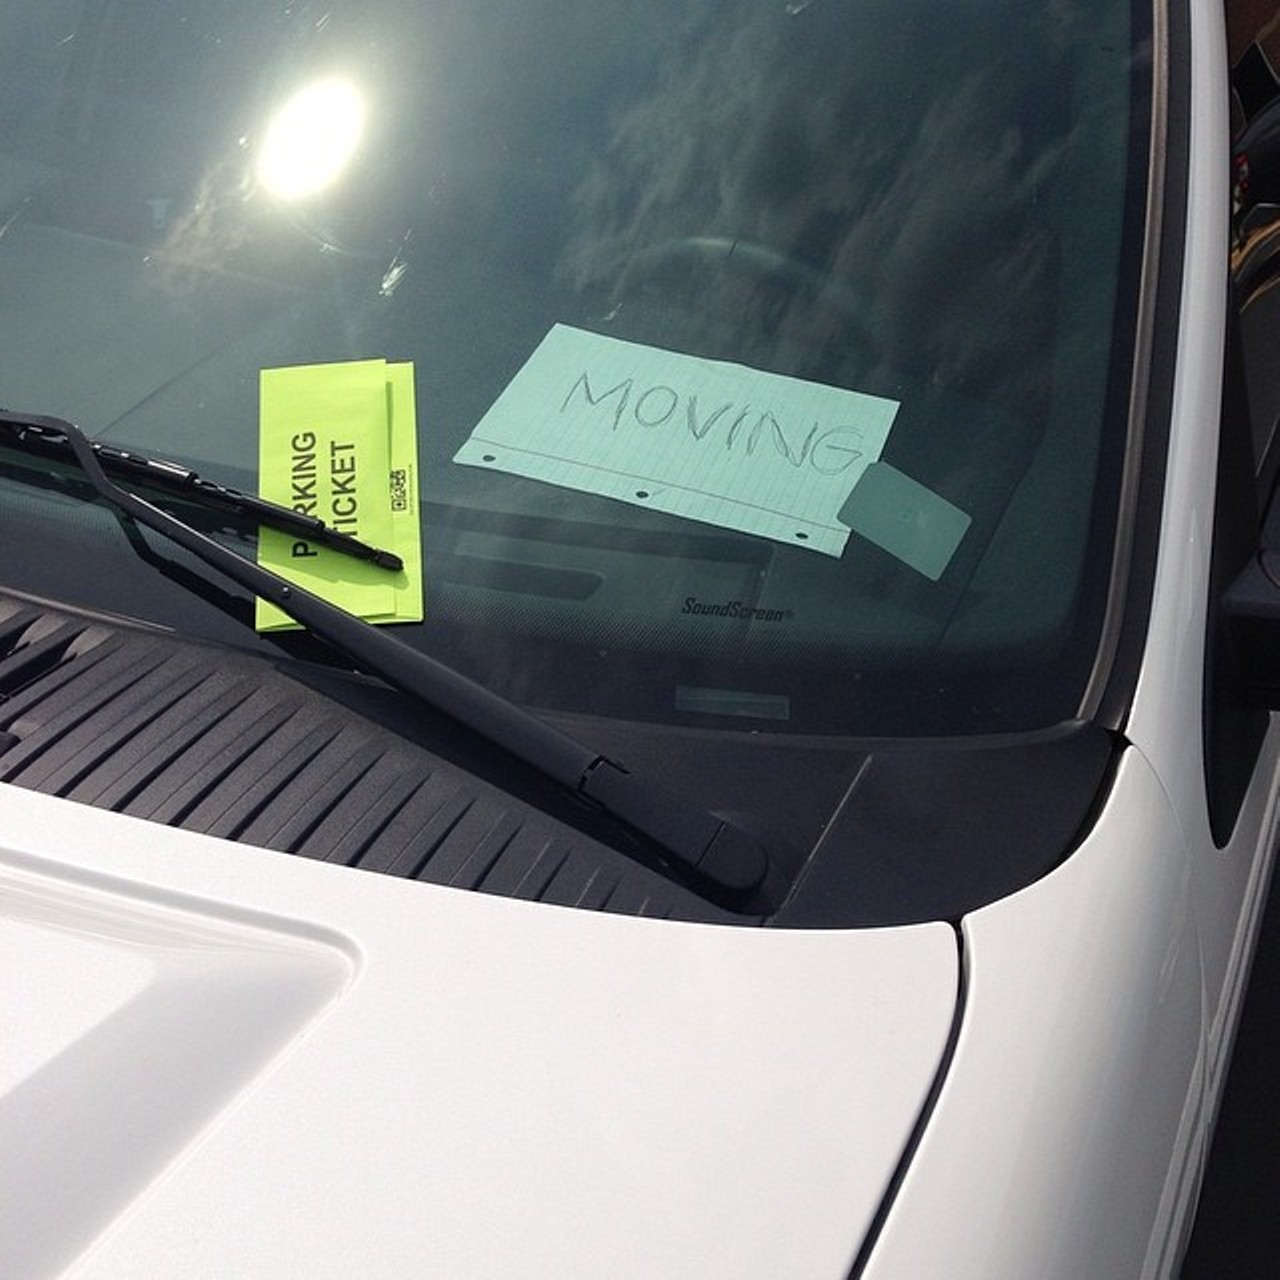  Parking enforcement has no chill. 
"Zero fucks were given.. Lol"
Photo via nickfin91